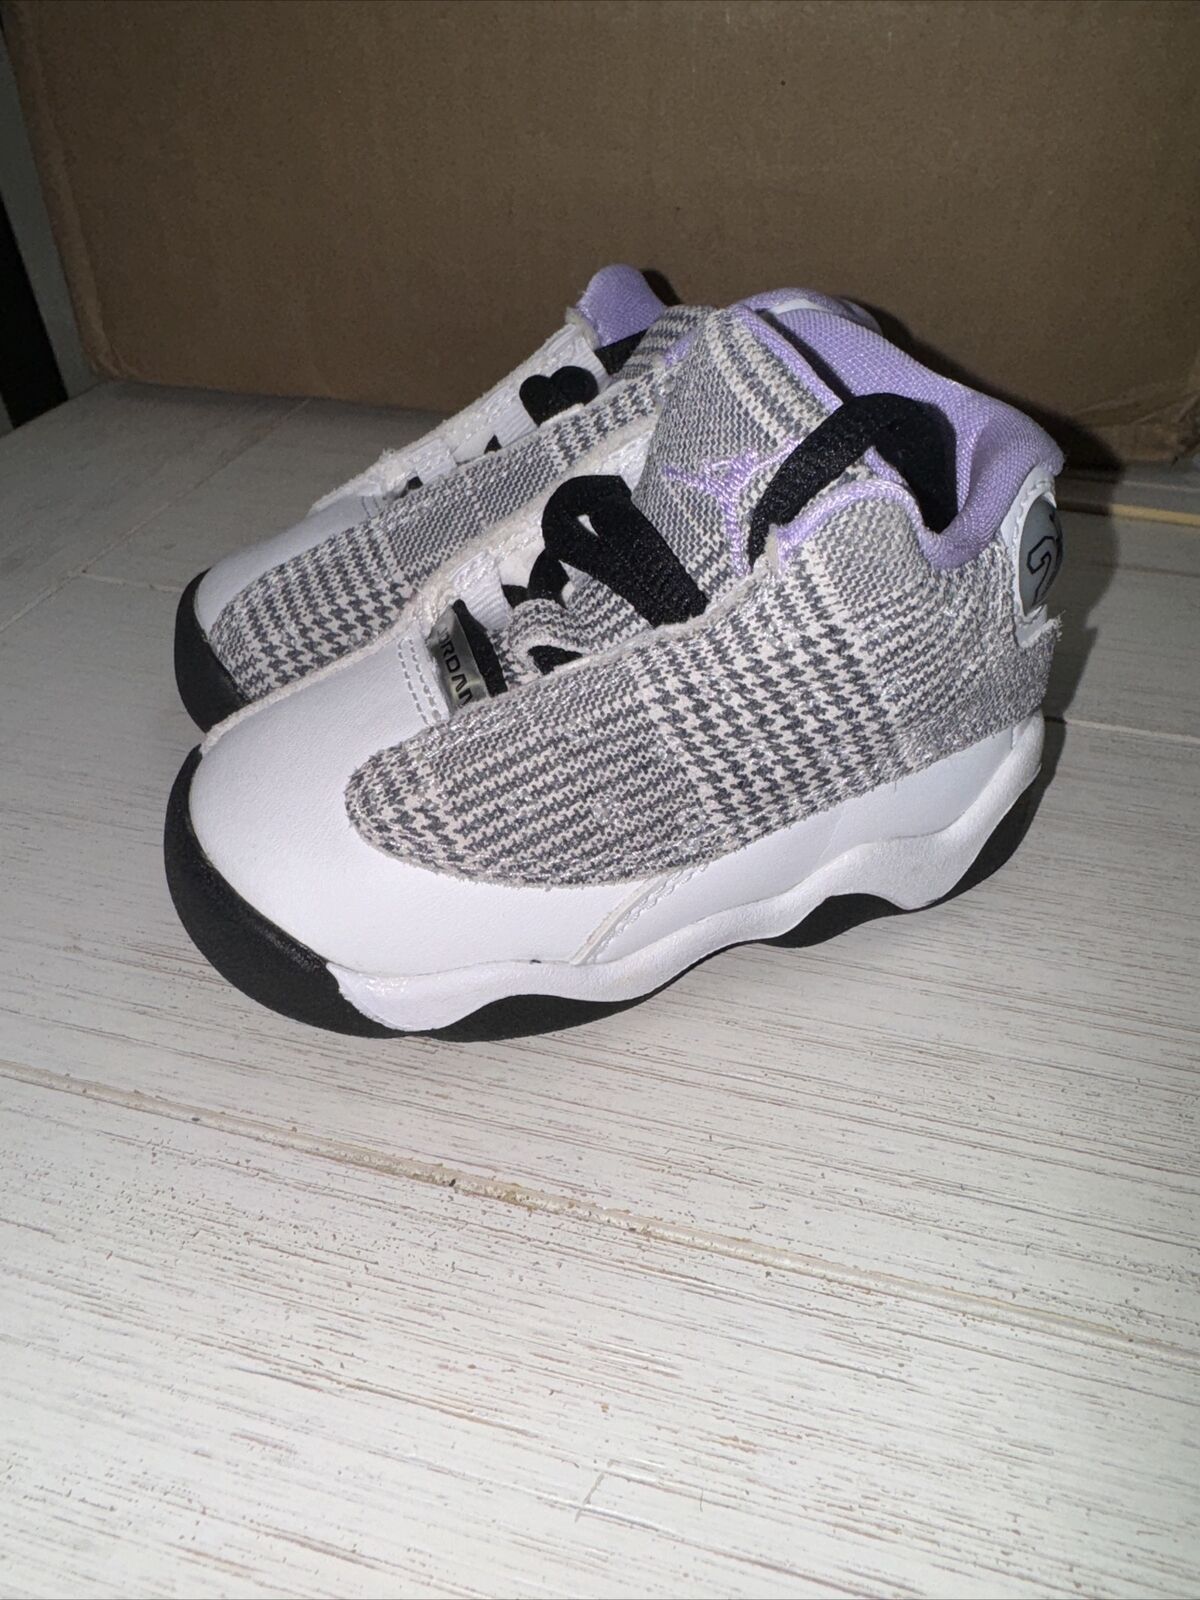 Jordan 13 Retro Houndstooth Unisex Baby Shoes 5C